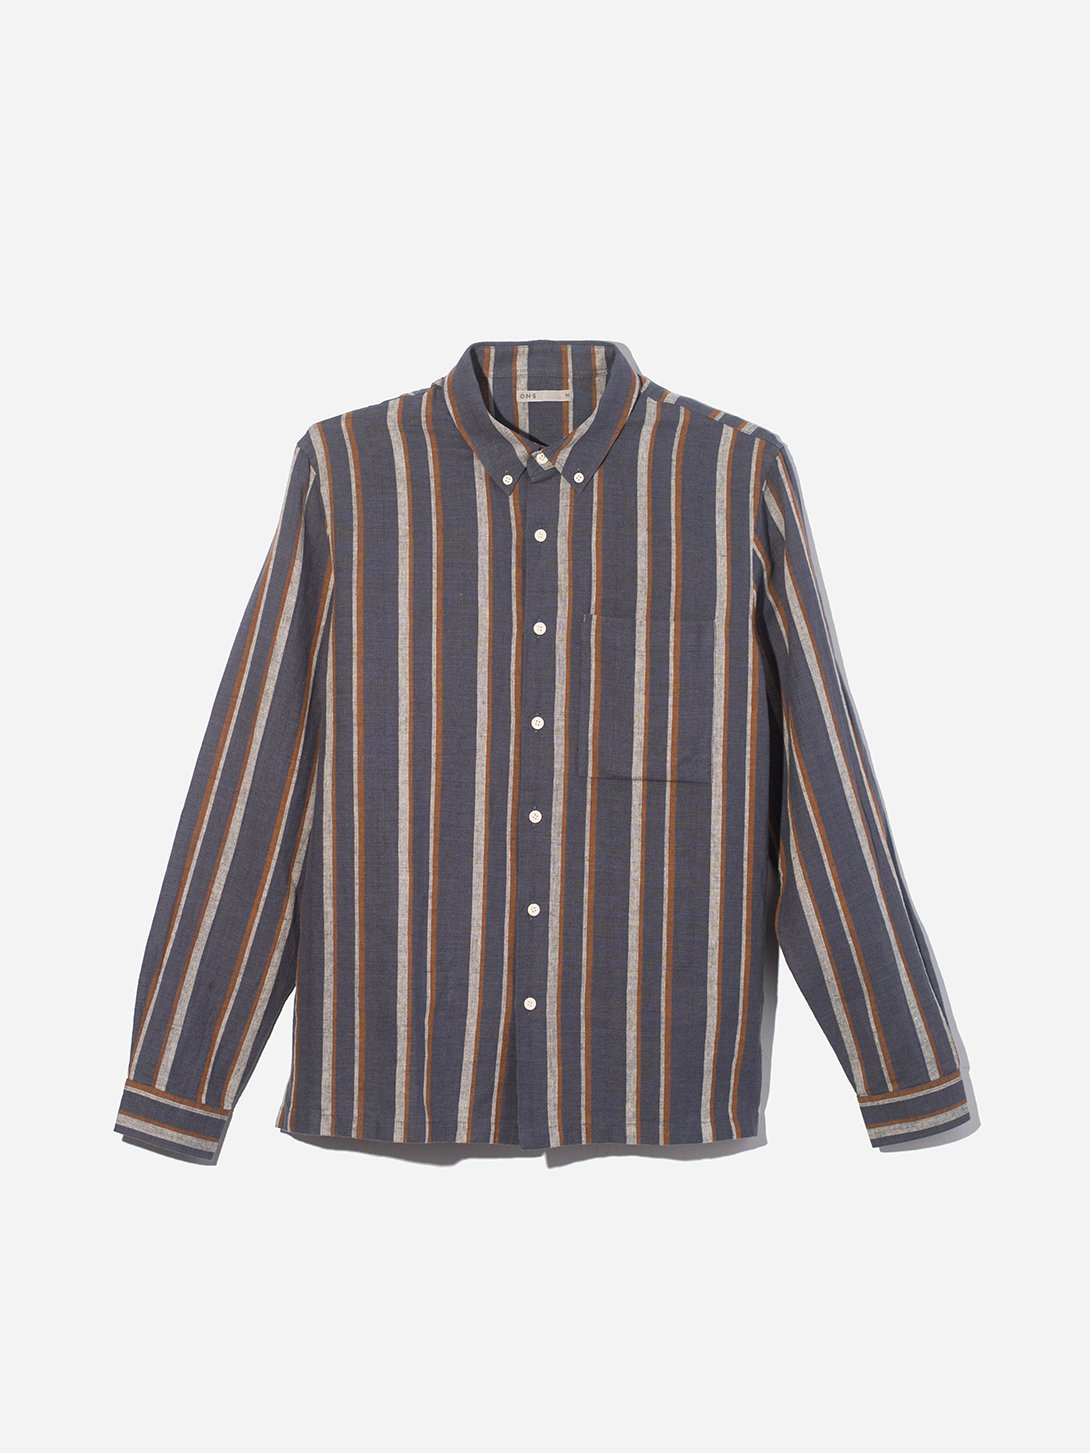 BLUE STRIPE button down shirt for men vance stripe linen cotton shirt ons clothing